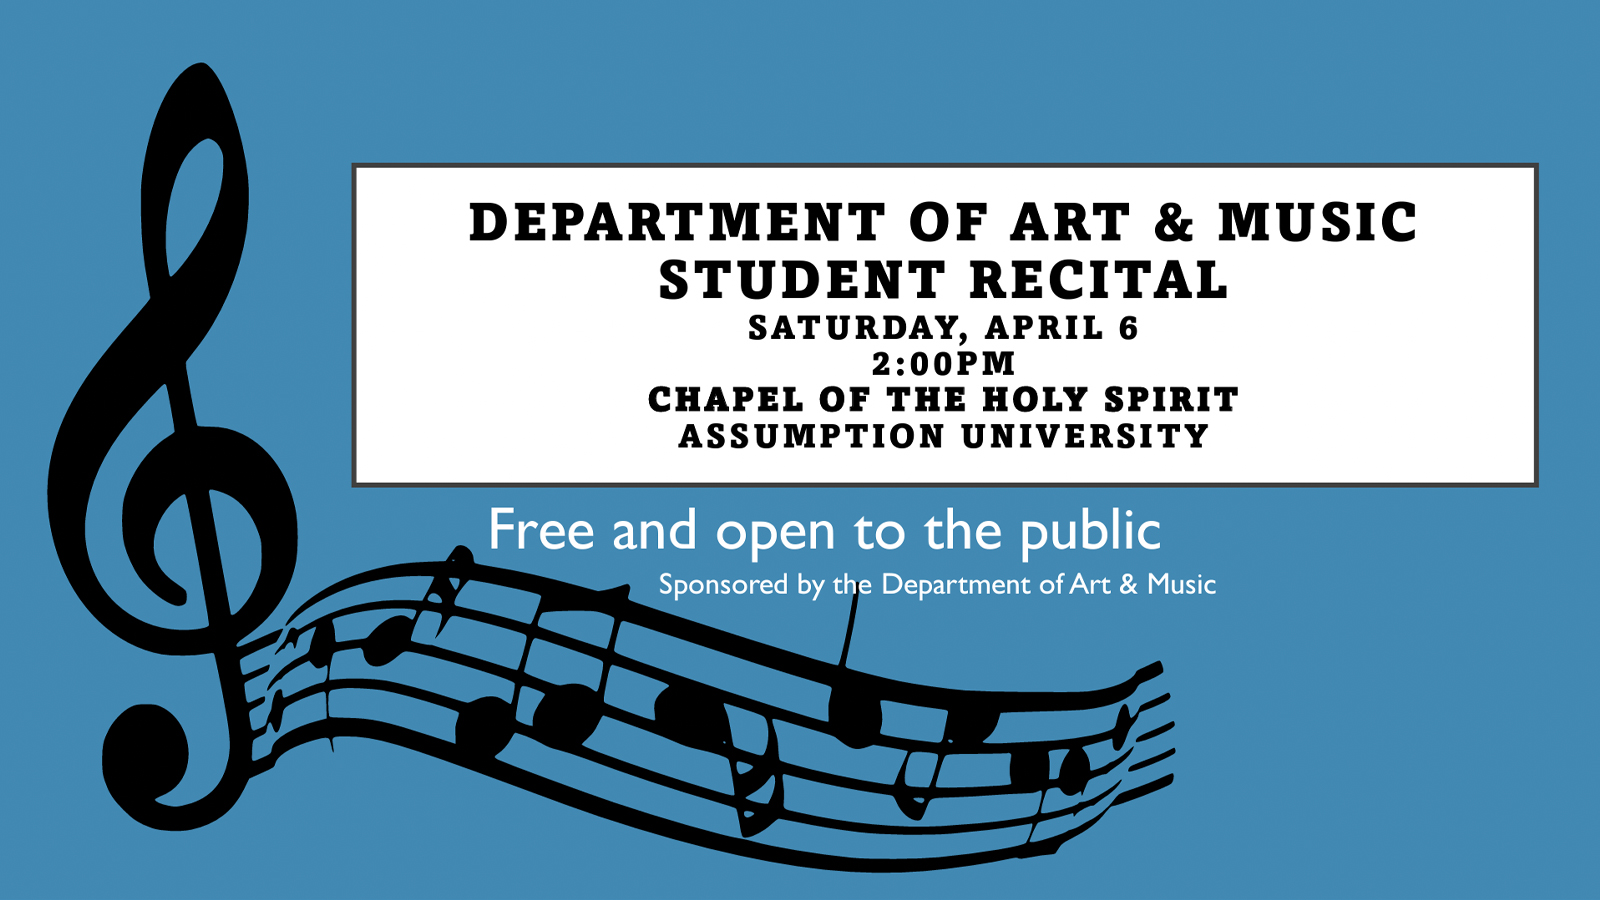 Assumption University's Art and Music Department Student Recital